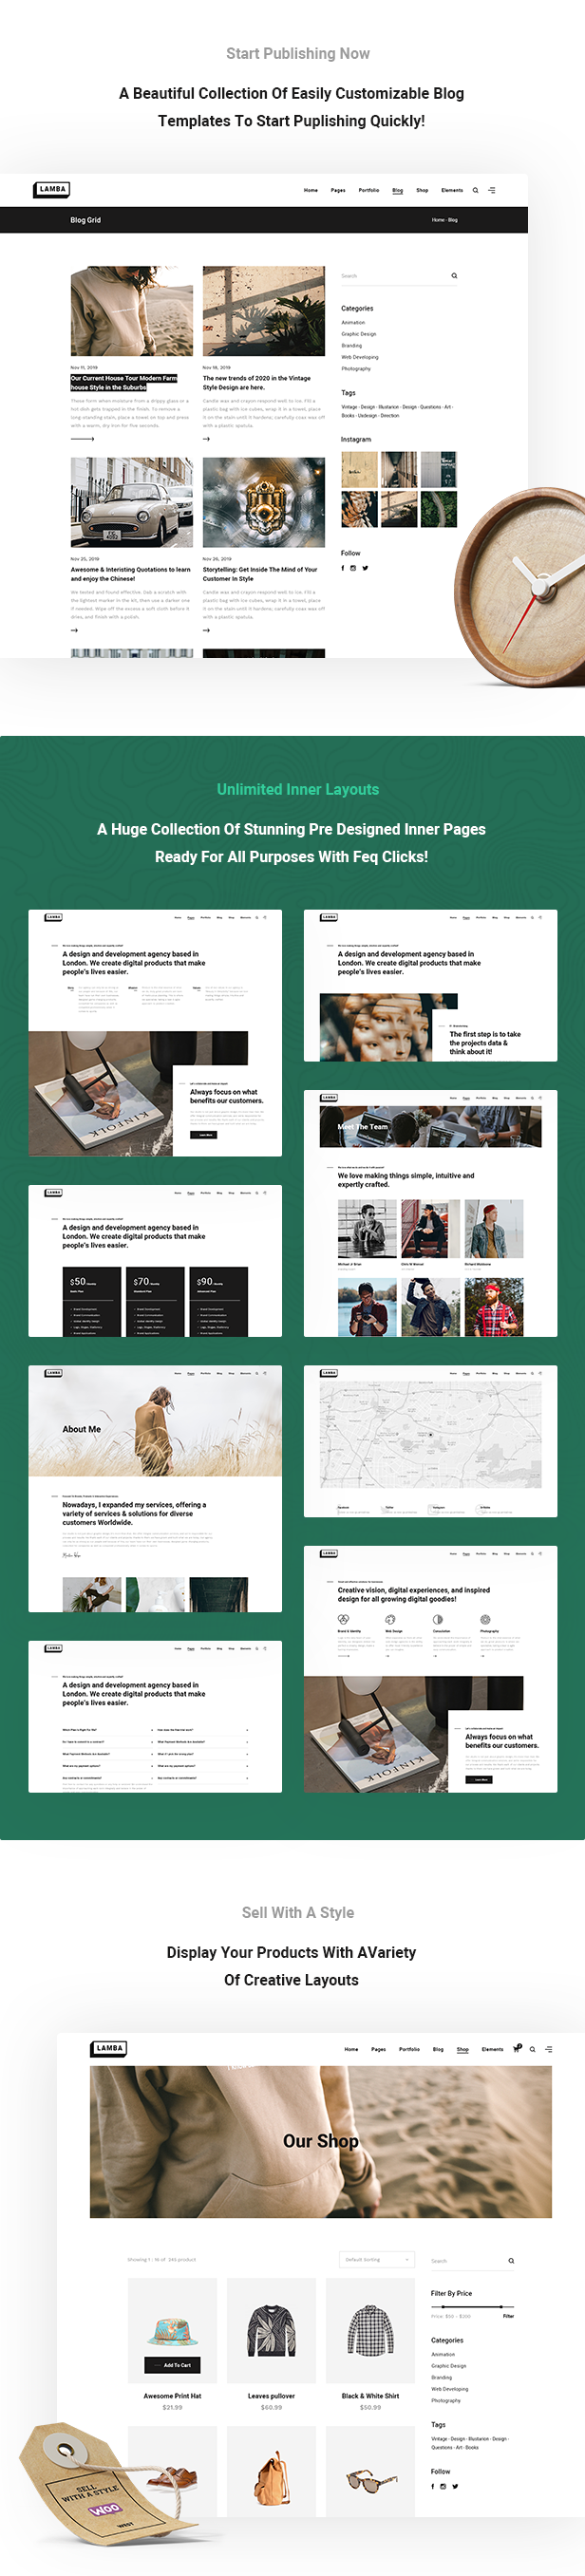 Lamba - Creative Portfolio & Agency WordPress Theme - 5